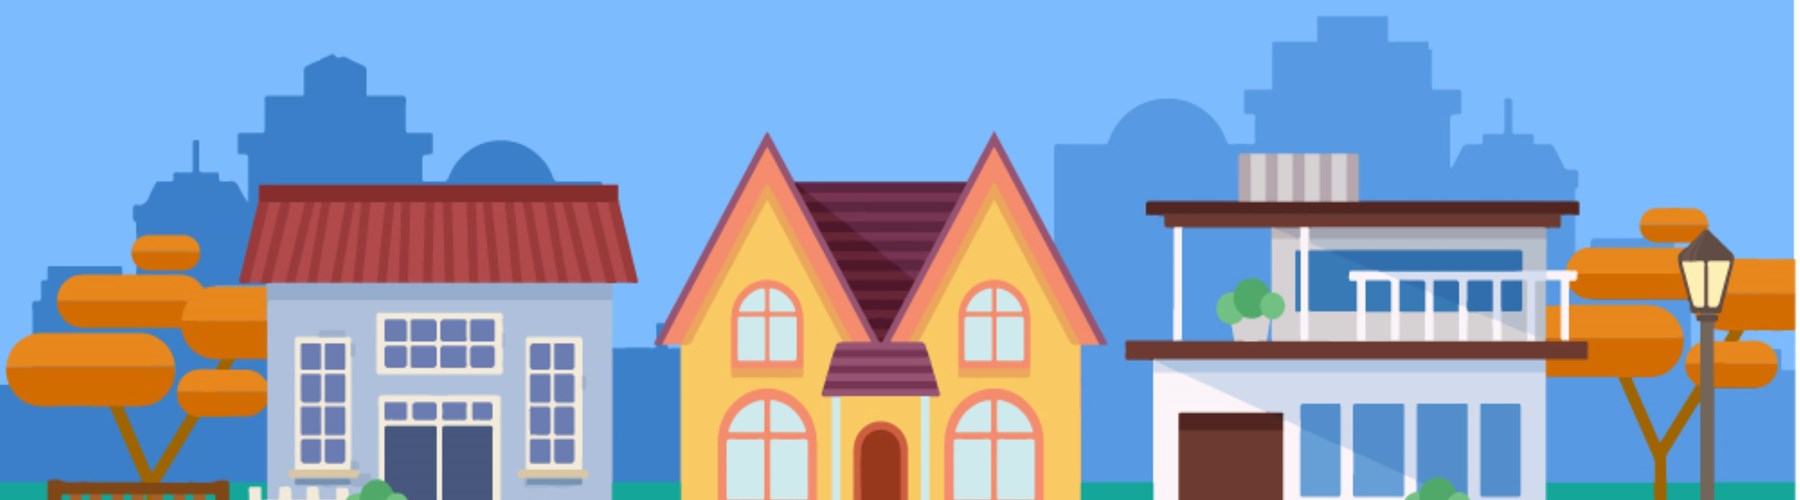 Coloured illustration of three houses 